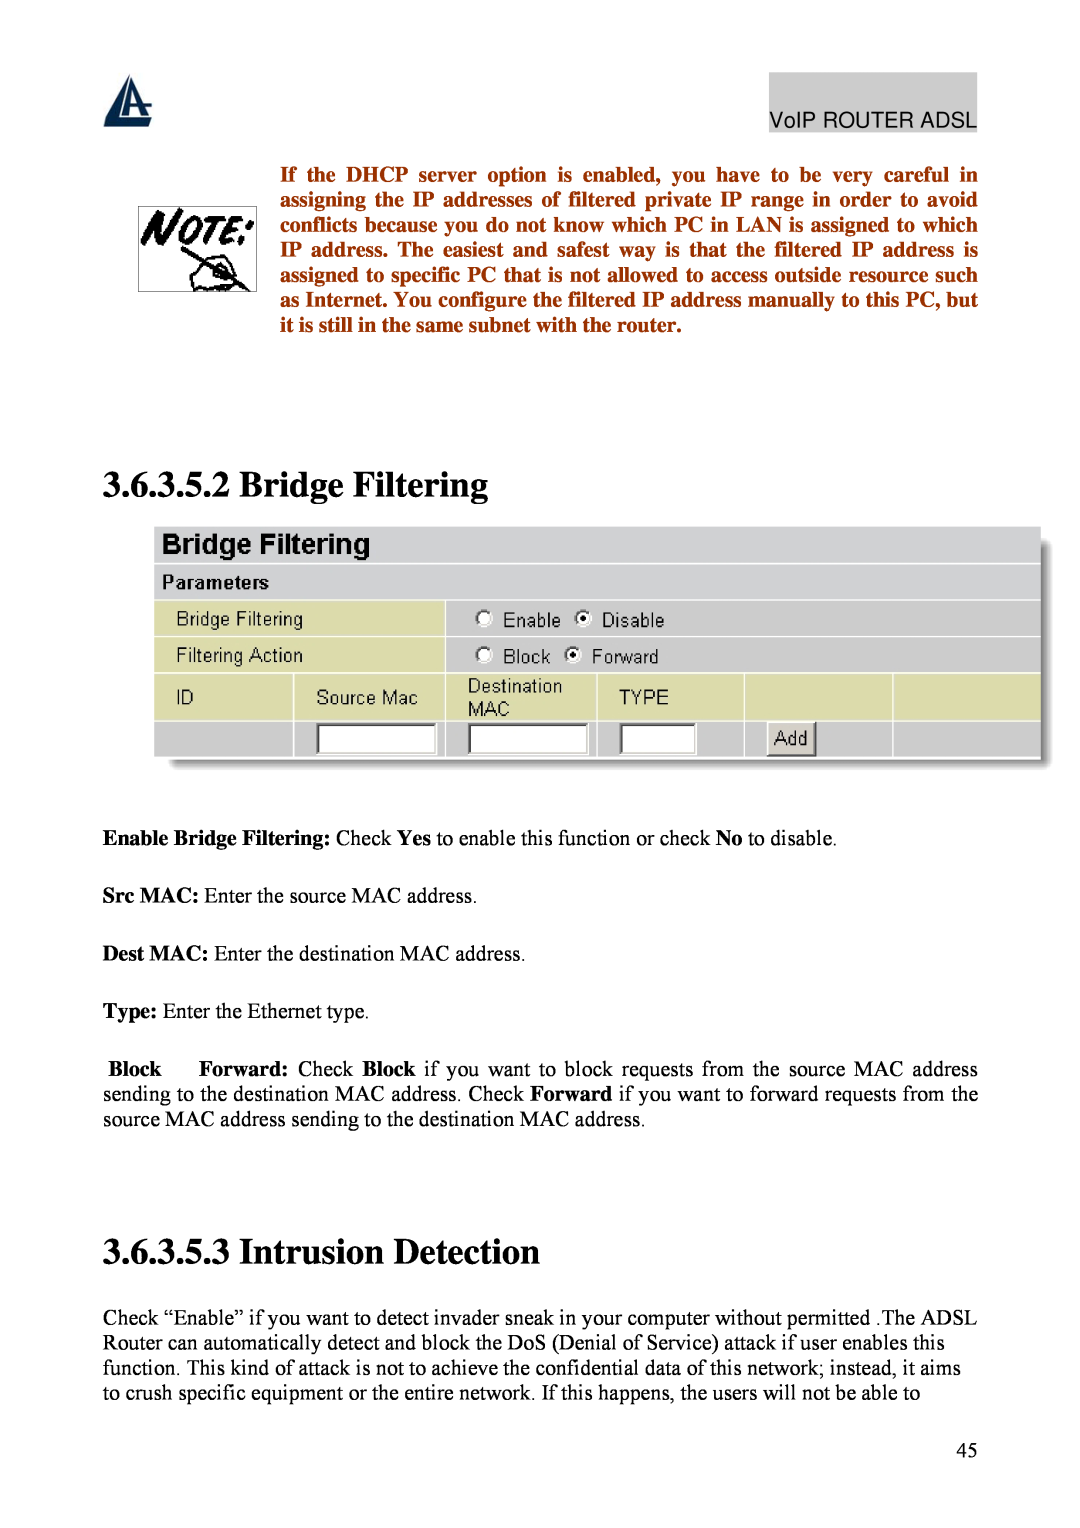 Atlantis Land A02-RAV211 manual Bridge Filtering, Intrusion Detection 